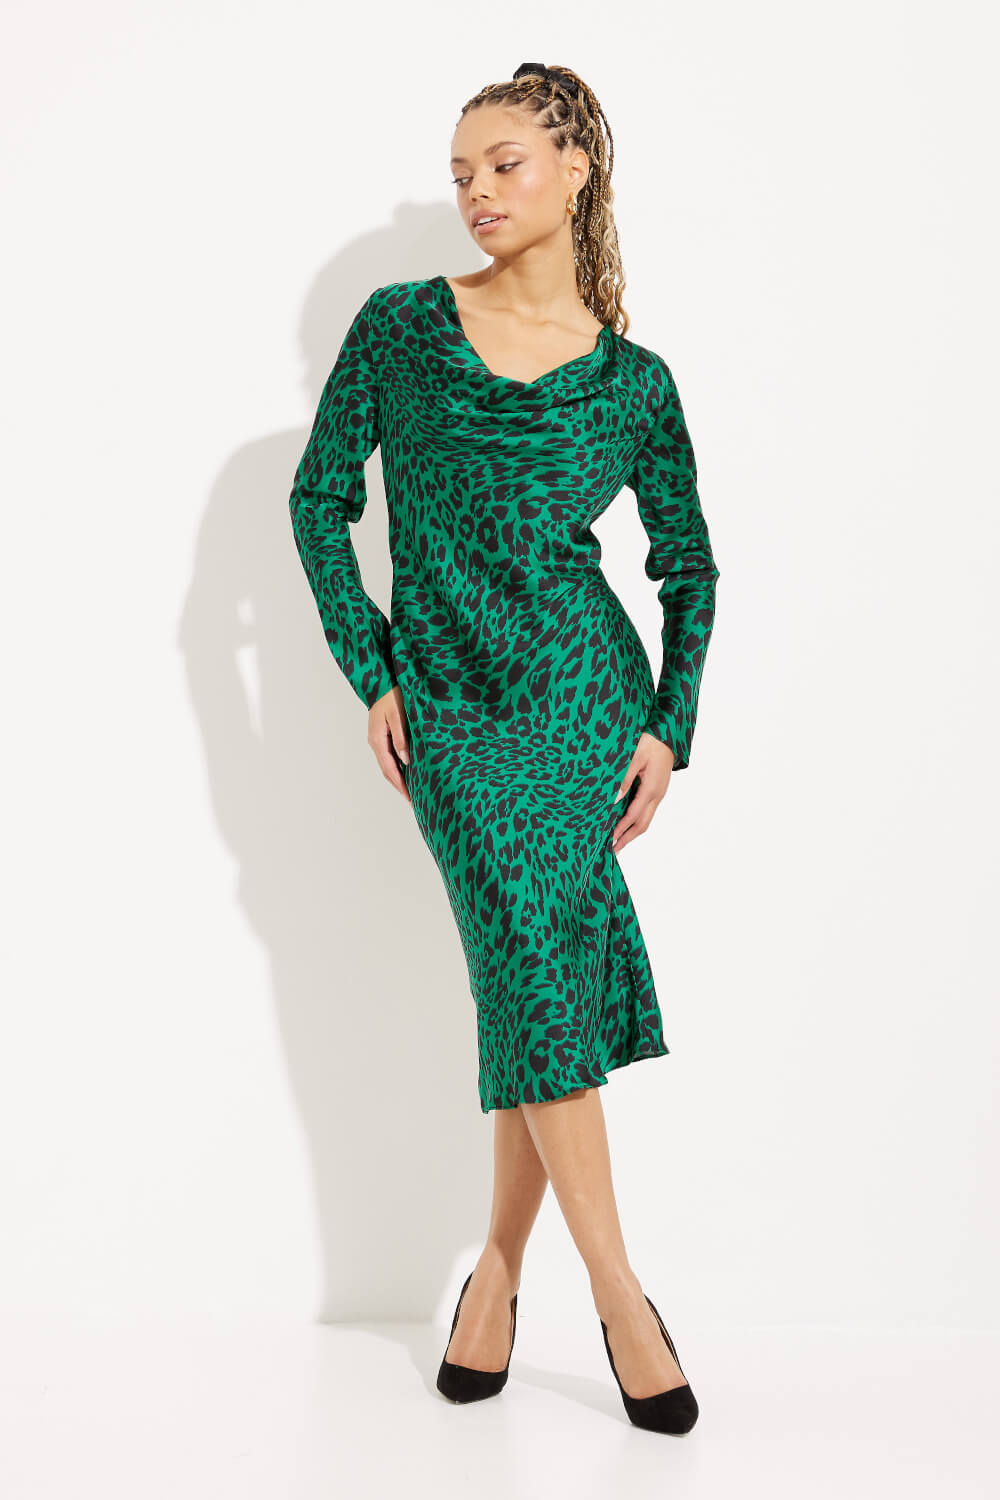 Leopard Print Sheath Dress Style 233115. Black/green/multi